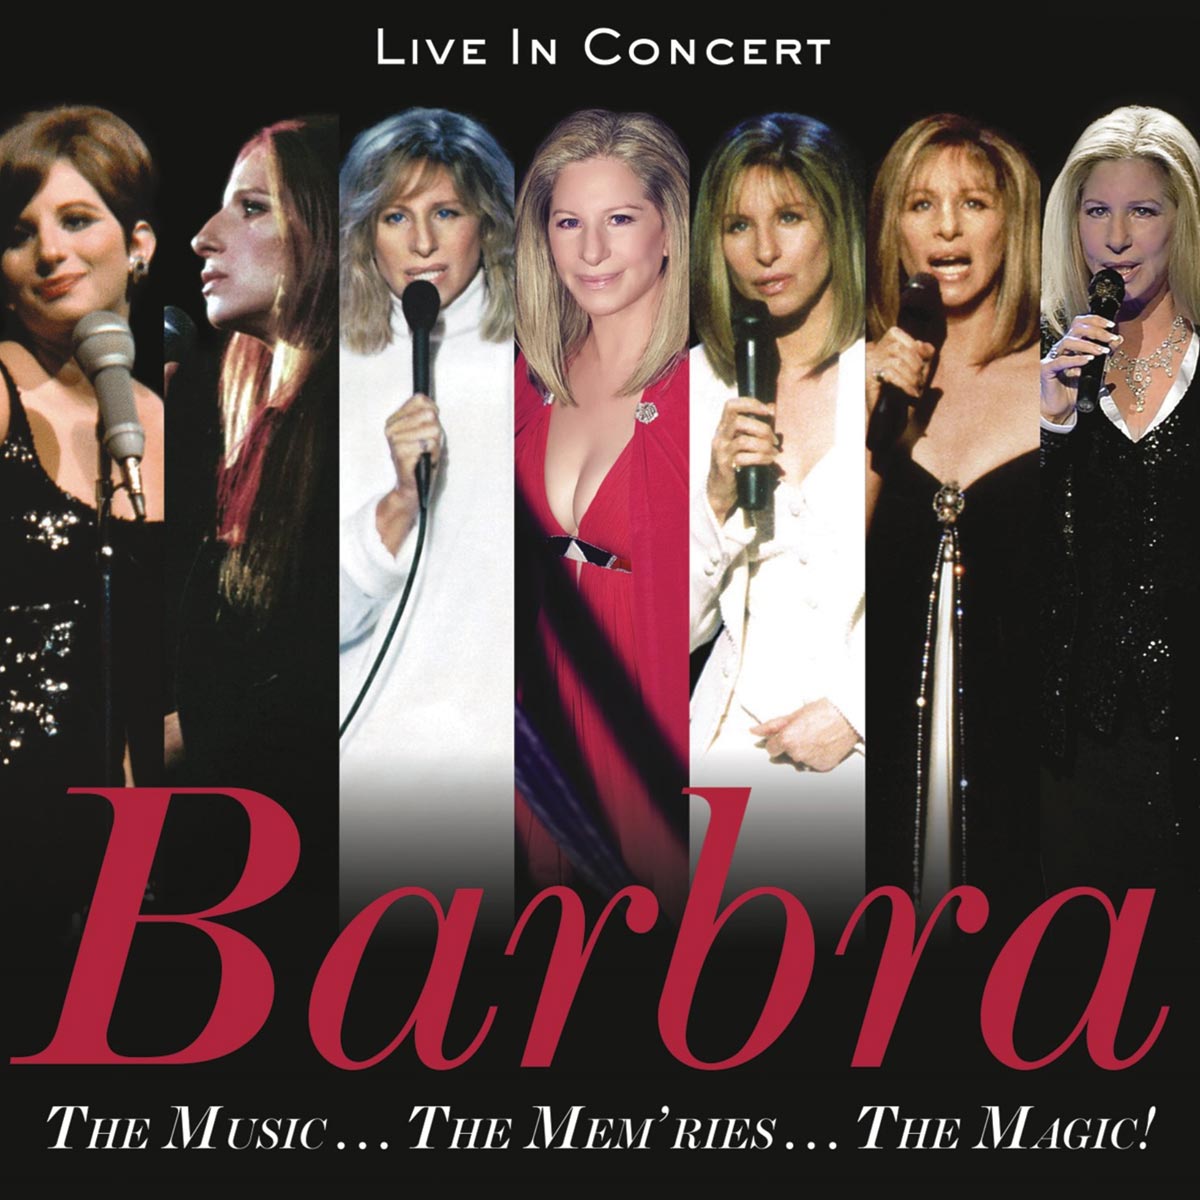 Streisand Barbra: The music ... The memories ...